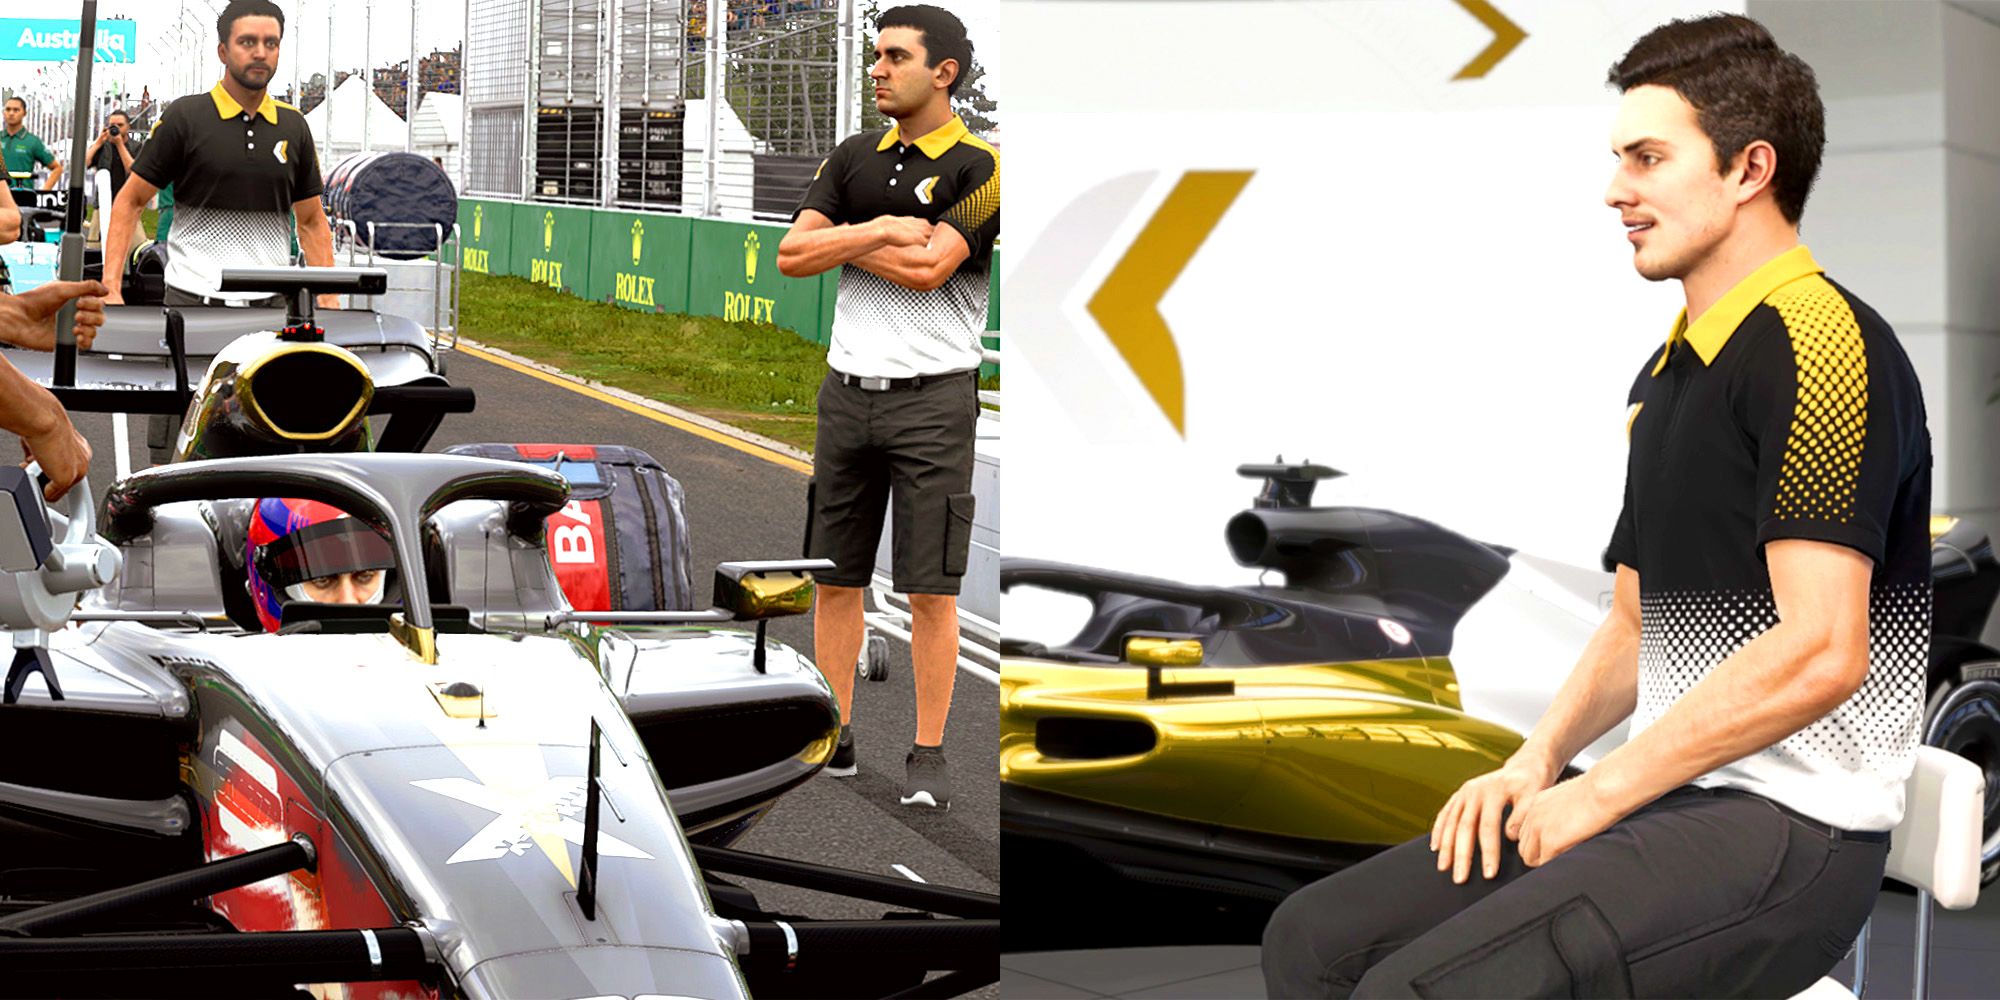 F1 23 Australia Setup: Online, career mode, & My Team settings